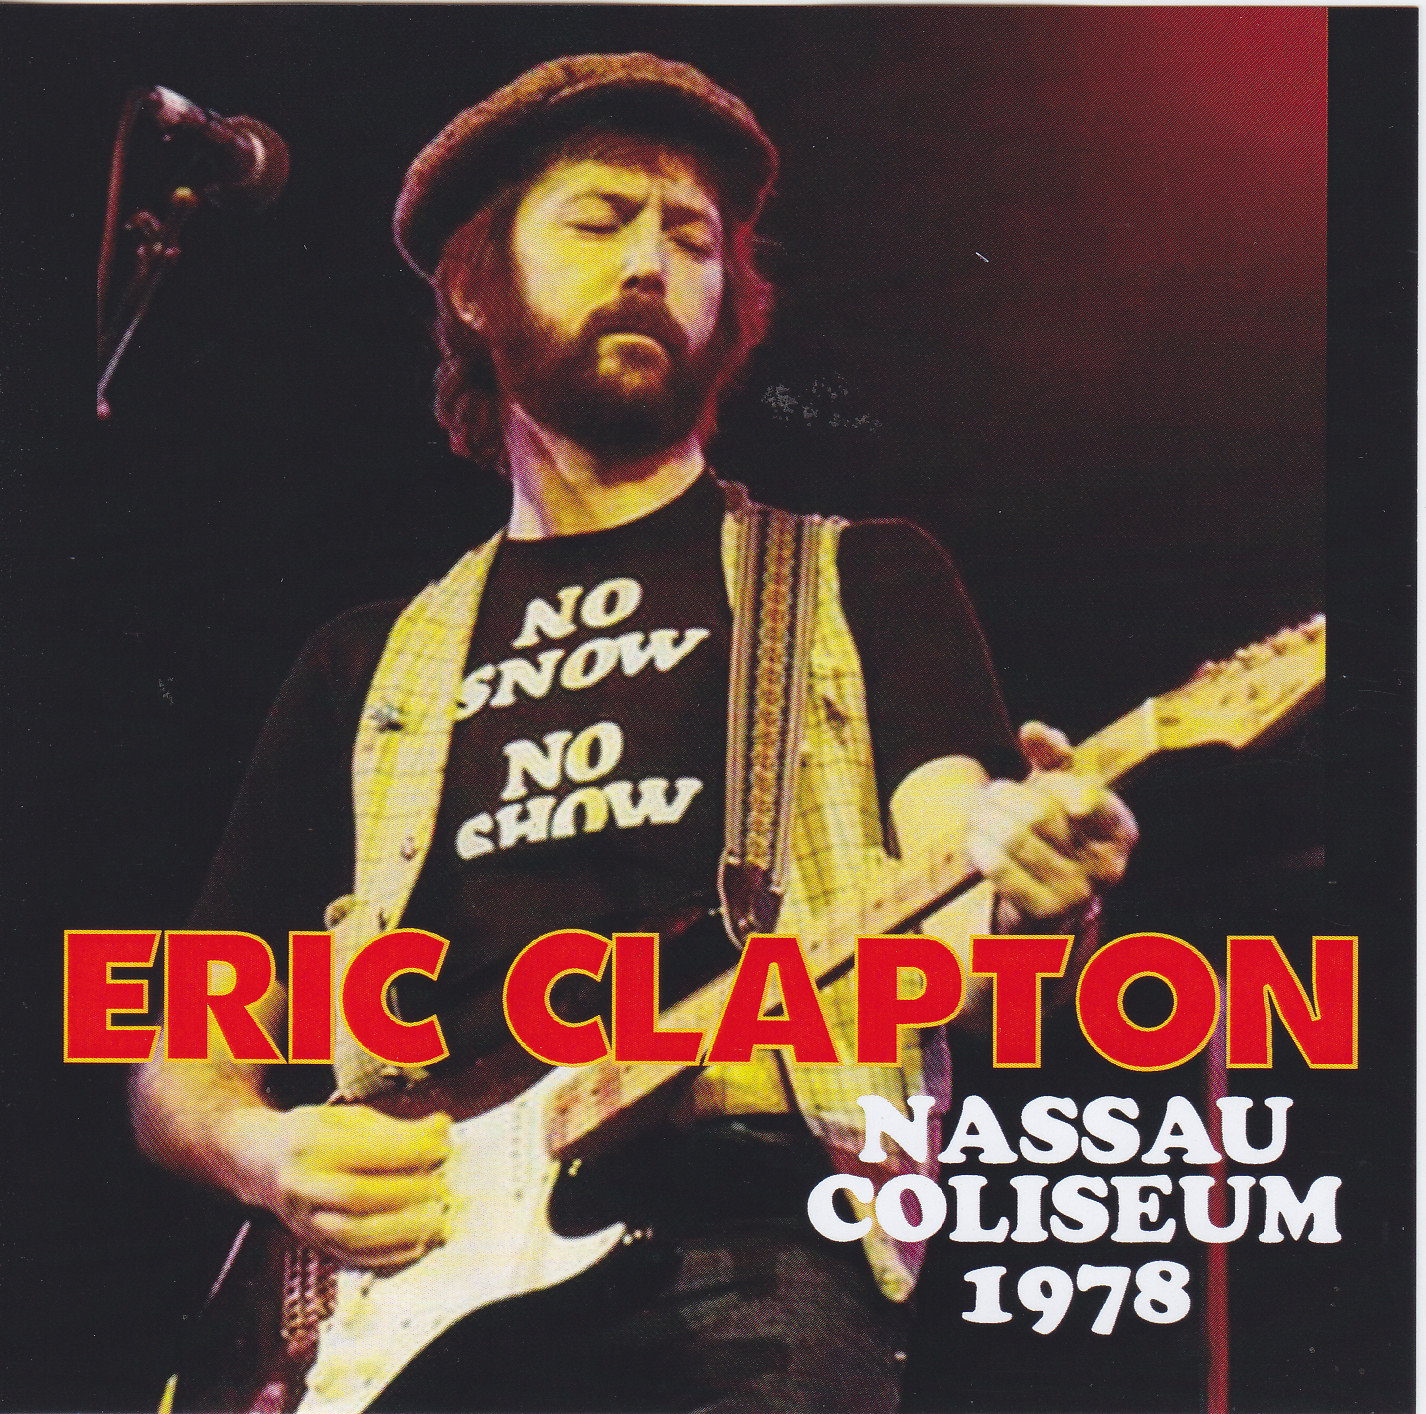 Eric Clapton / Nassau Coliseum 1978 / 2CDR – GiGinJapan